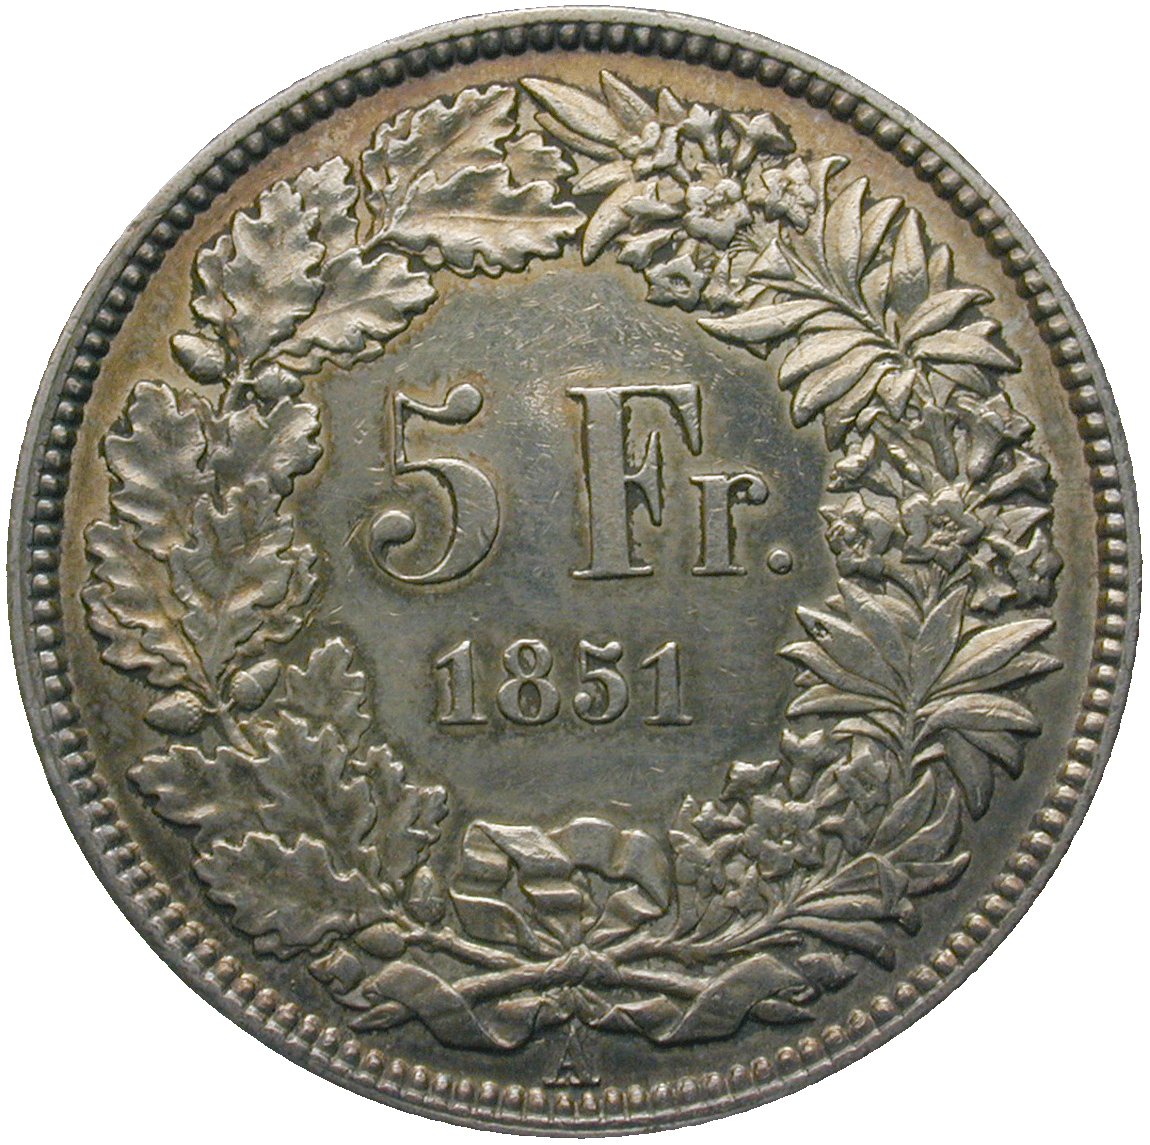 Swiss Confederation, 5 Francs 1851 (reverse)